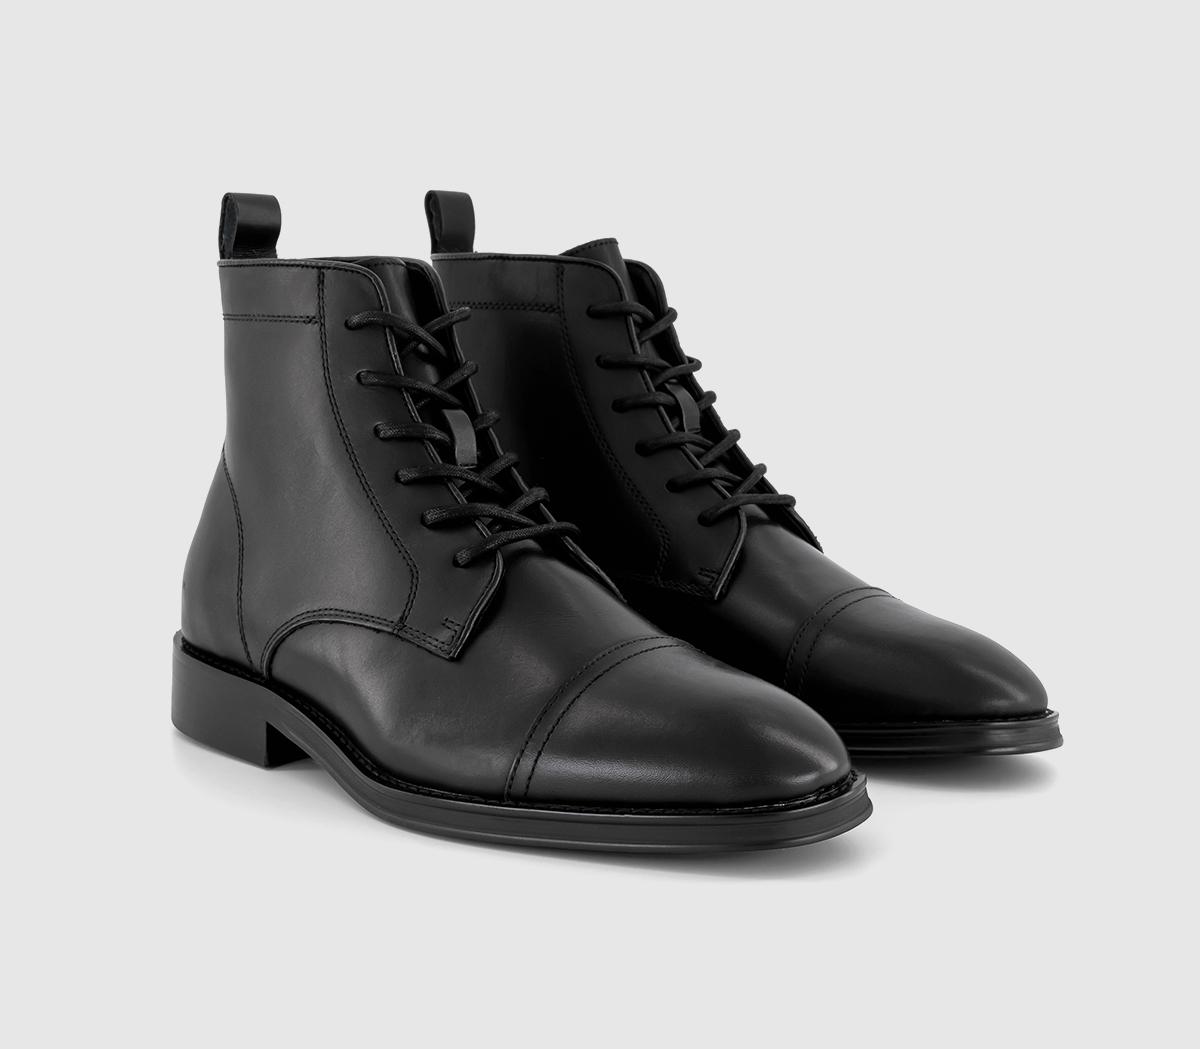 OFFICE Berwick Smart Laceup Toecap Boots Black Leather - Men’s Boots